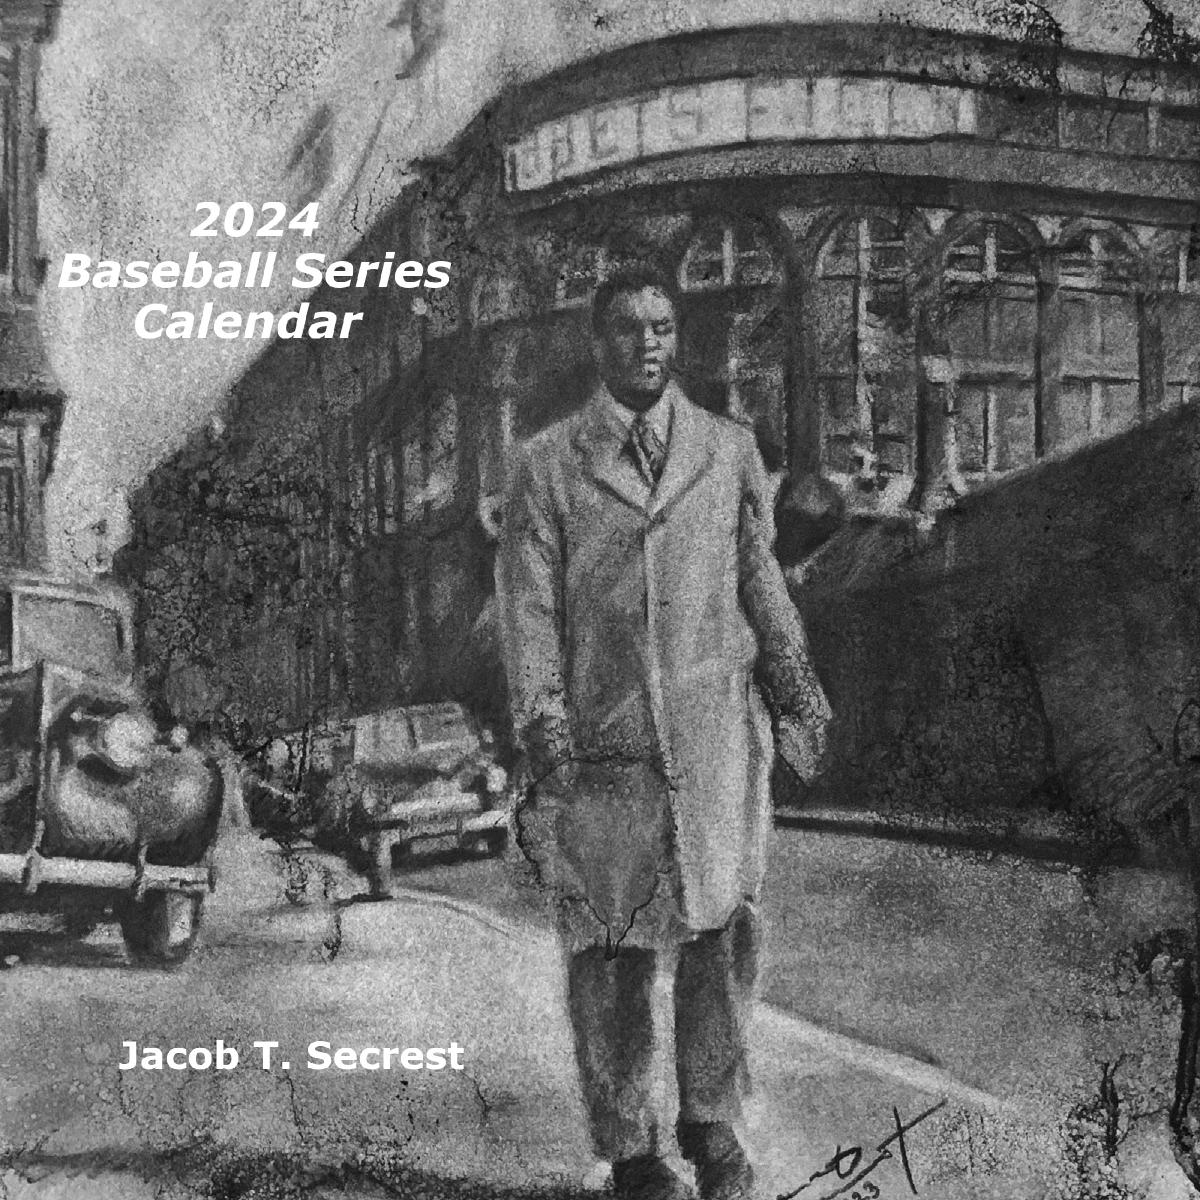 2024 Baseball Series Calendar by Jacob Secrest